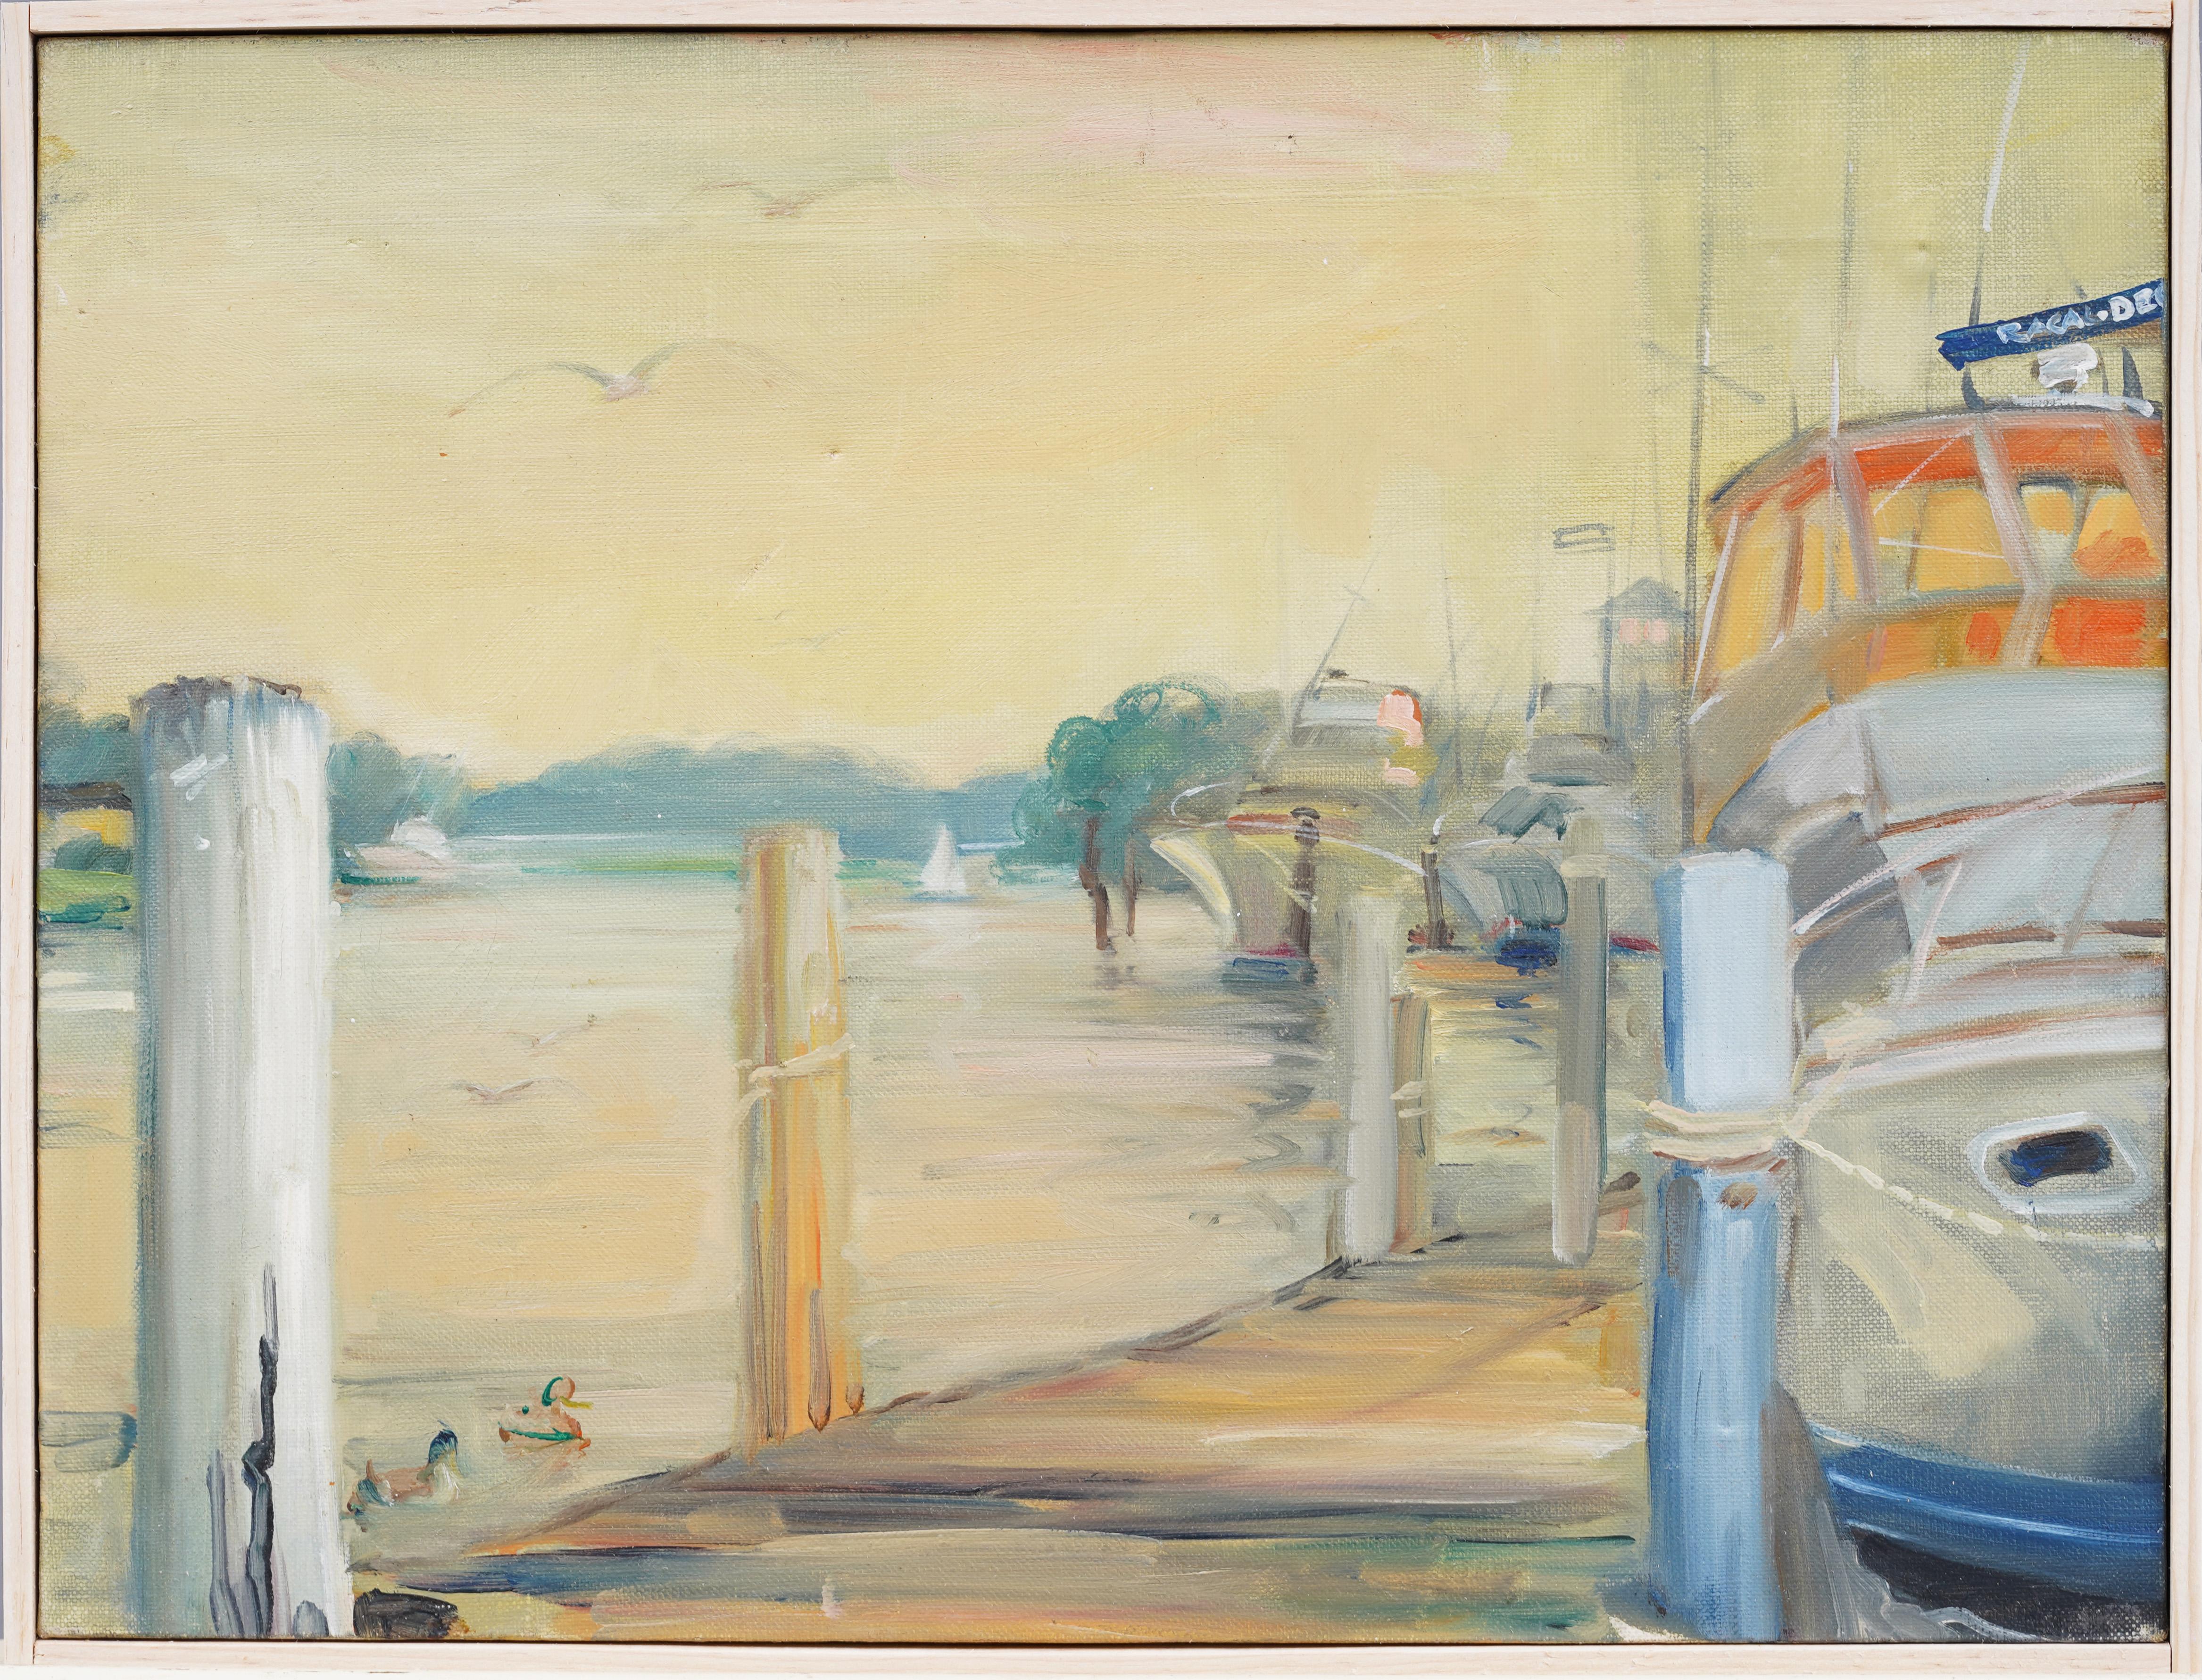 Vintage impressionist dock scene painting.  Oil on canvas.  Framed.  No signature found.